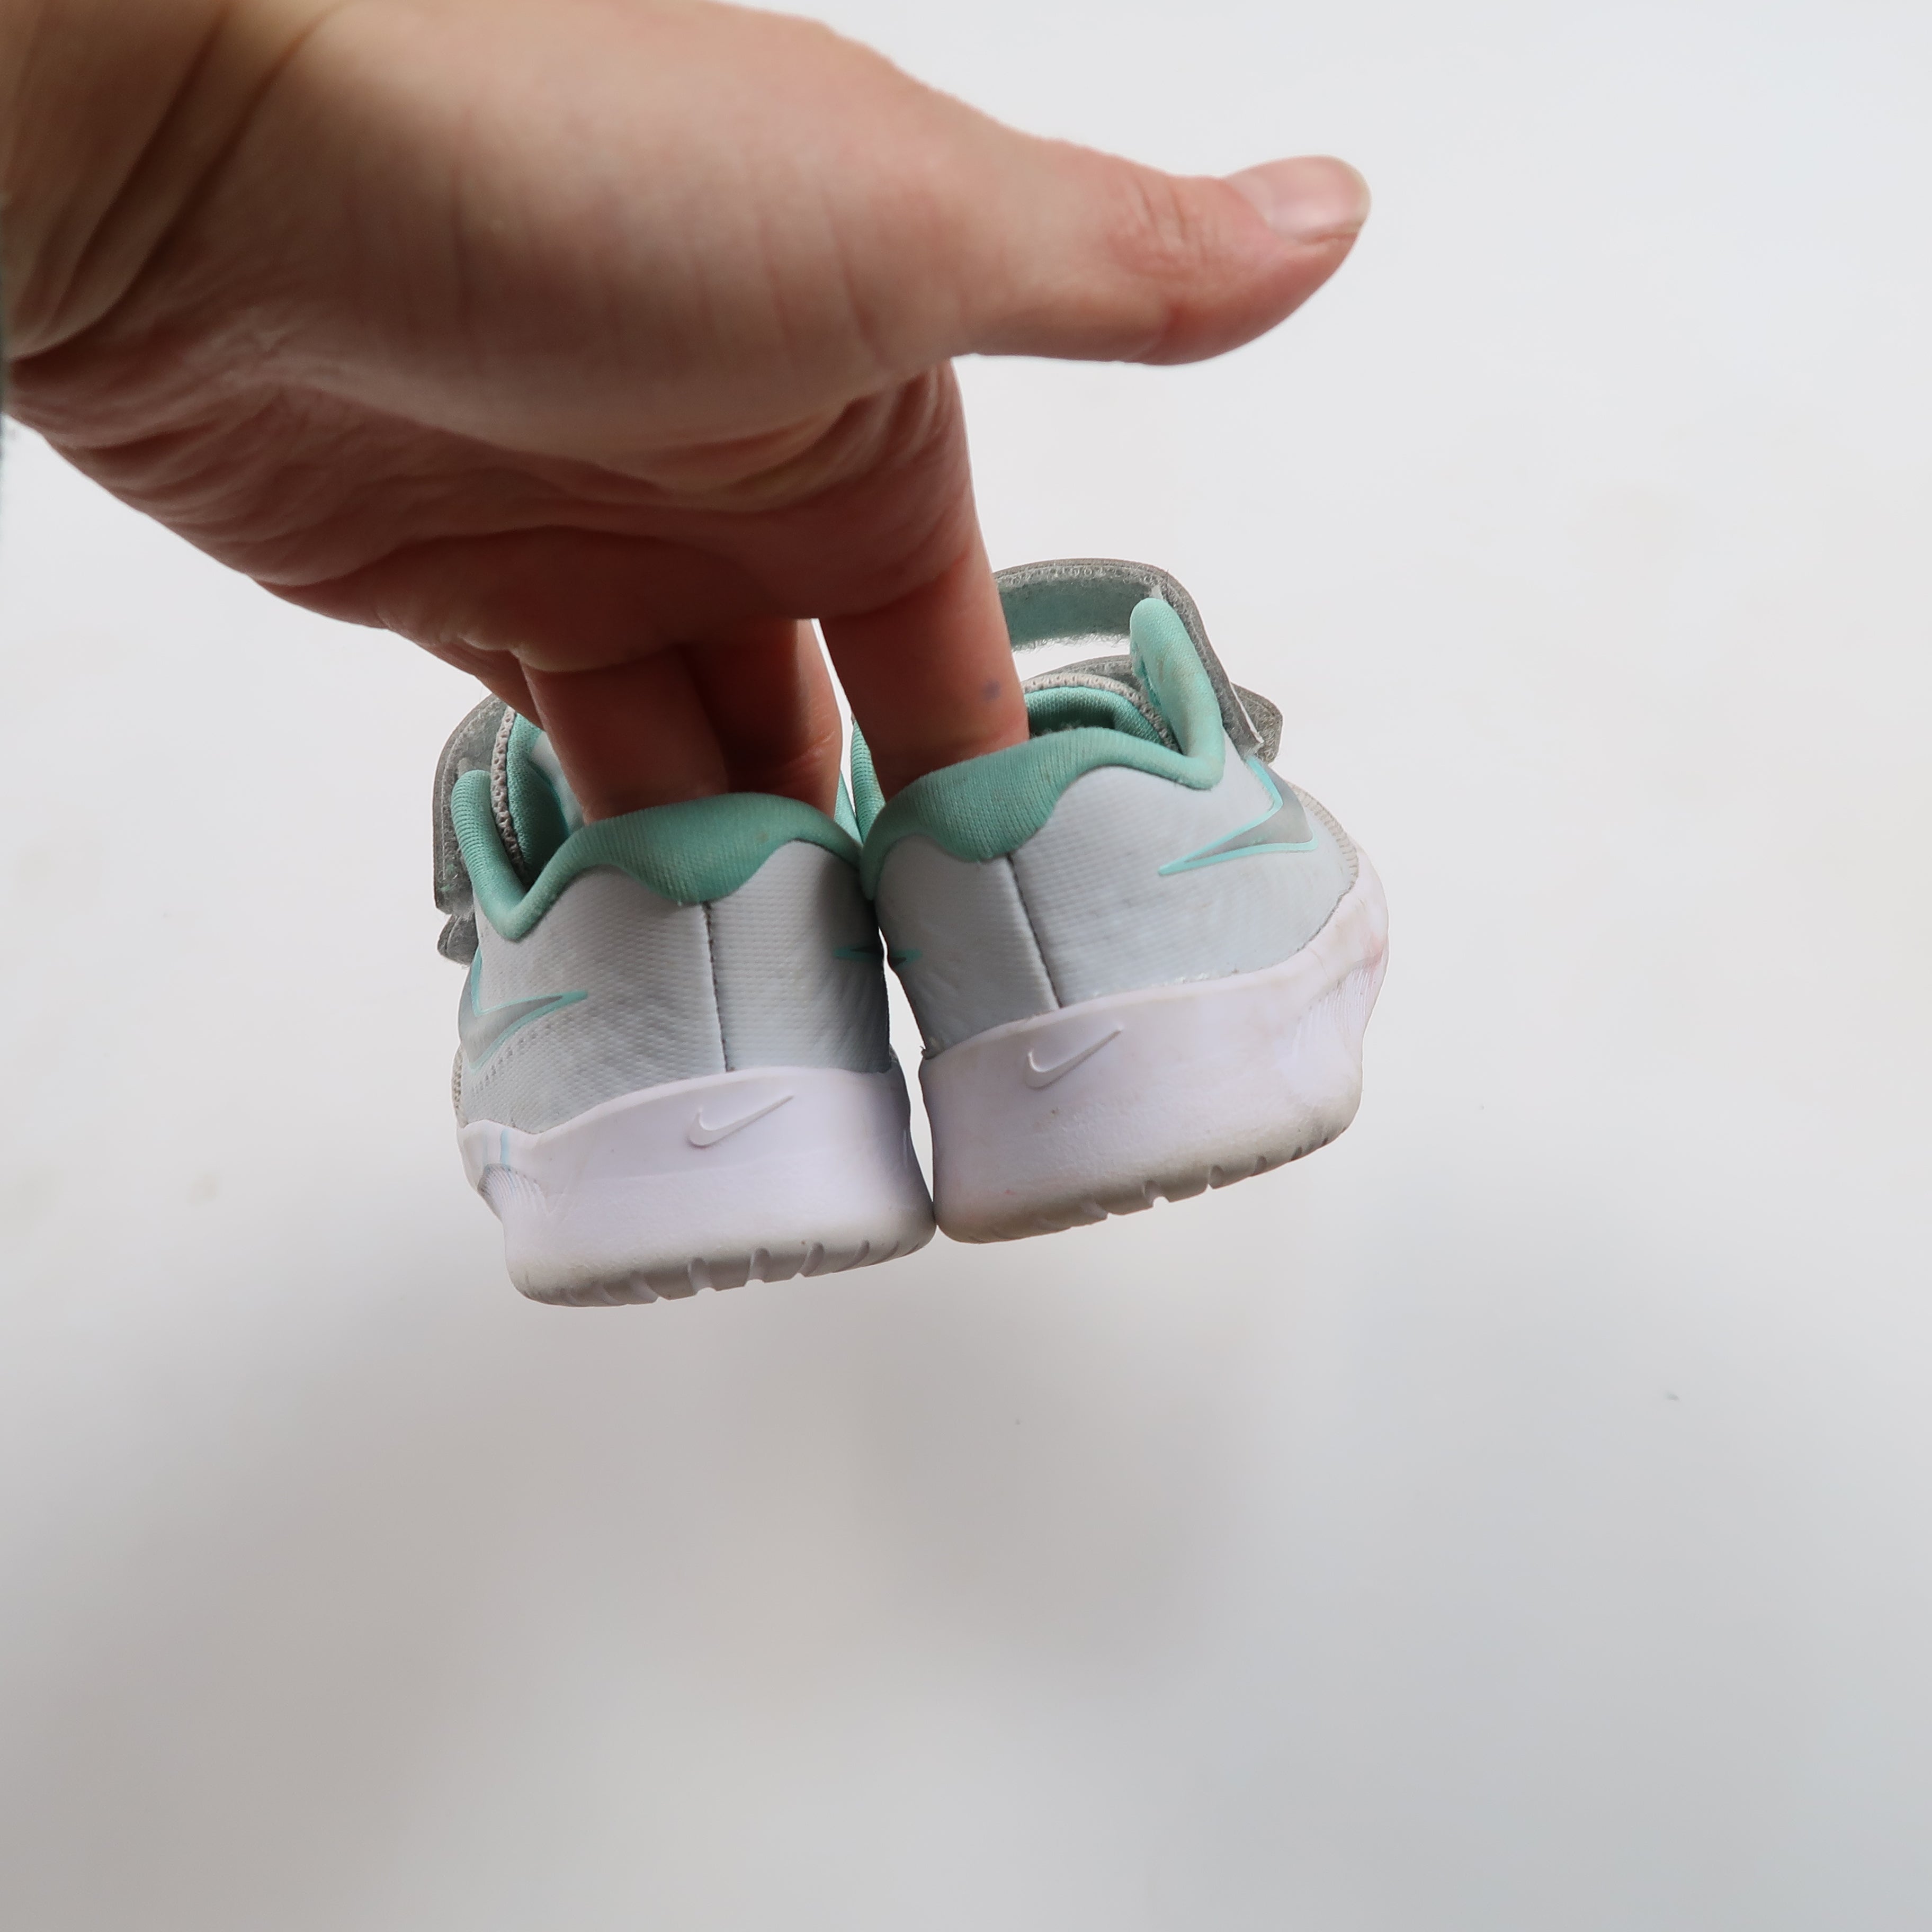 Nike - Shoes (Shoes - 7)